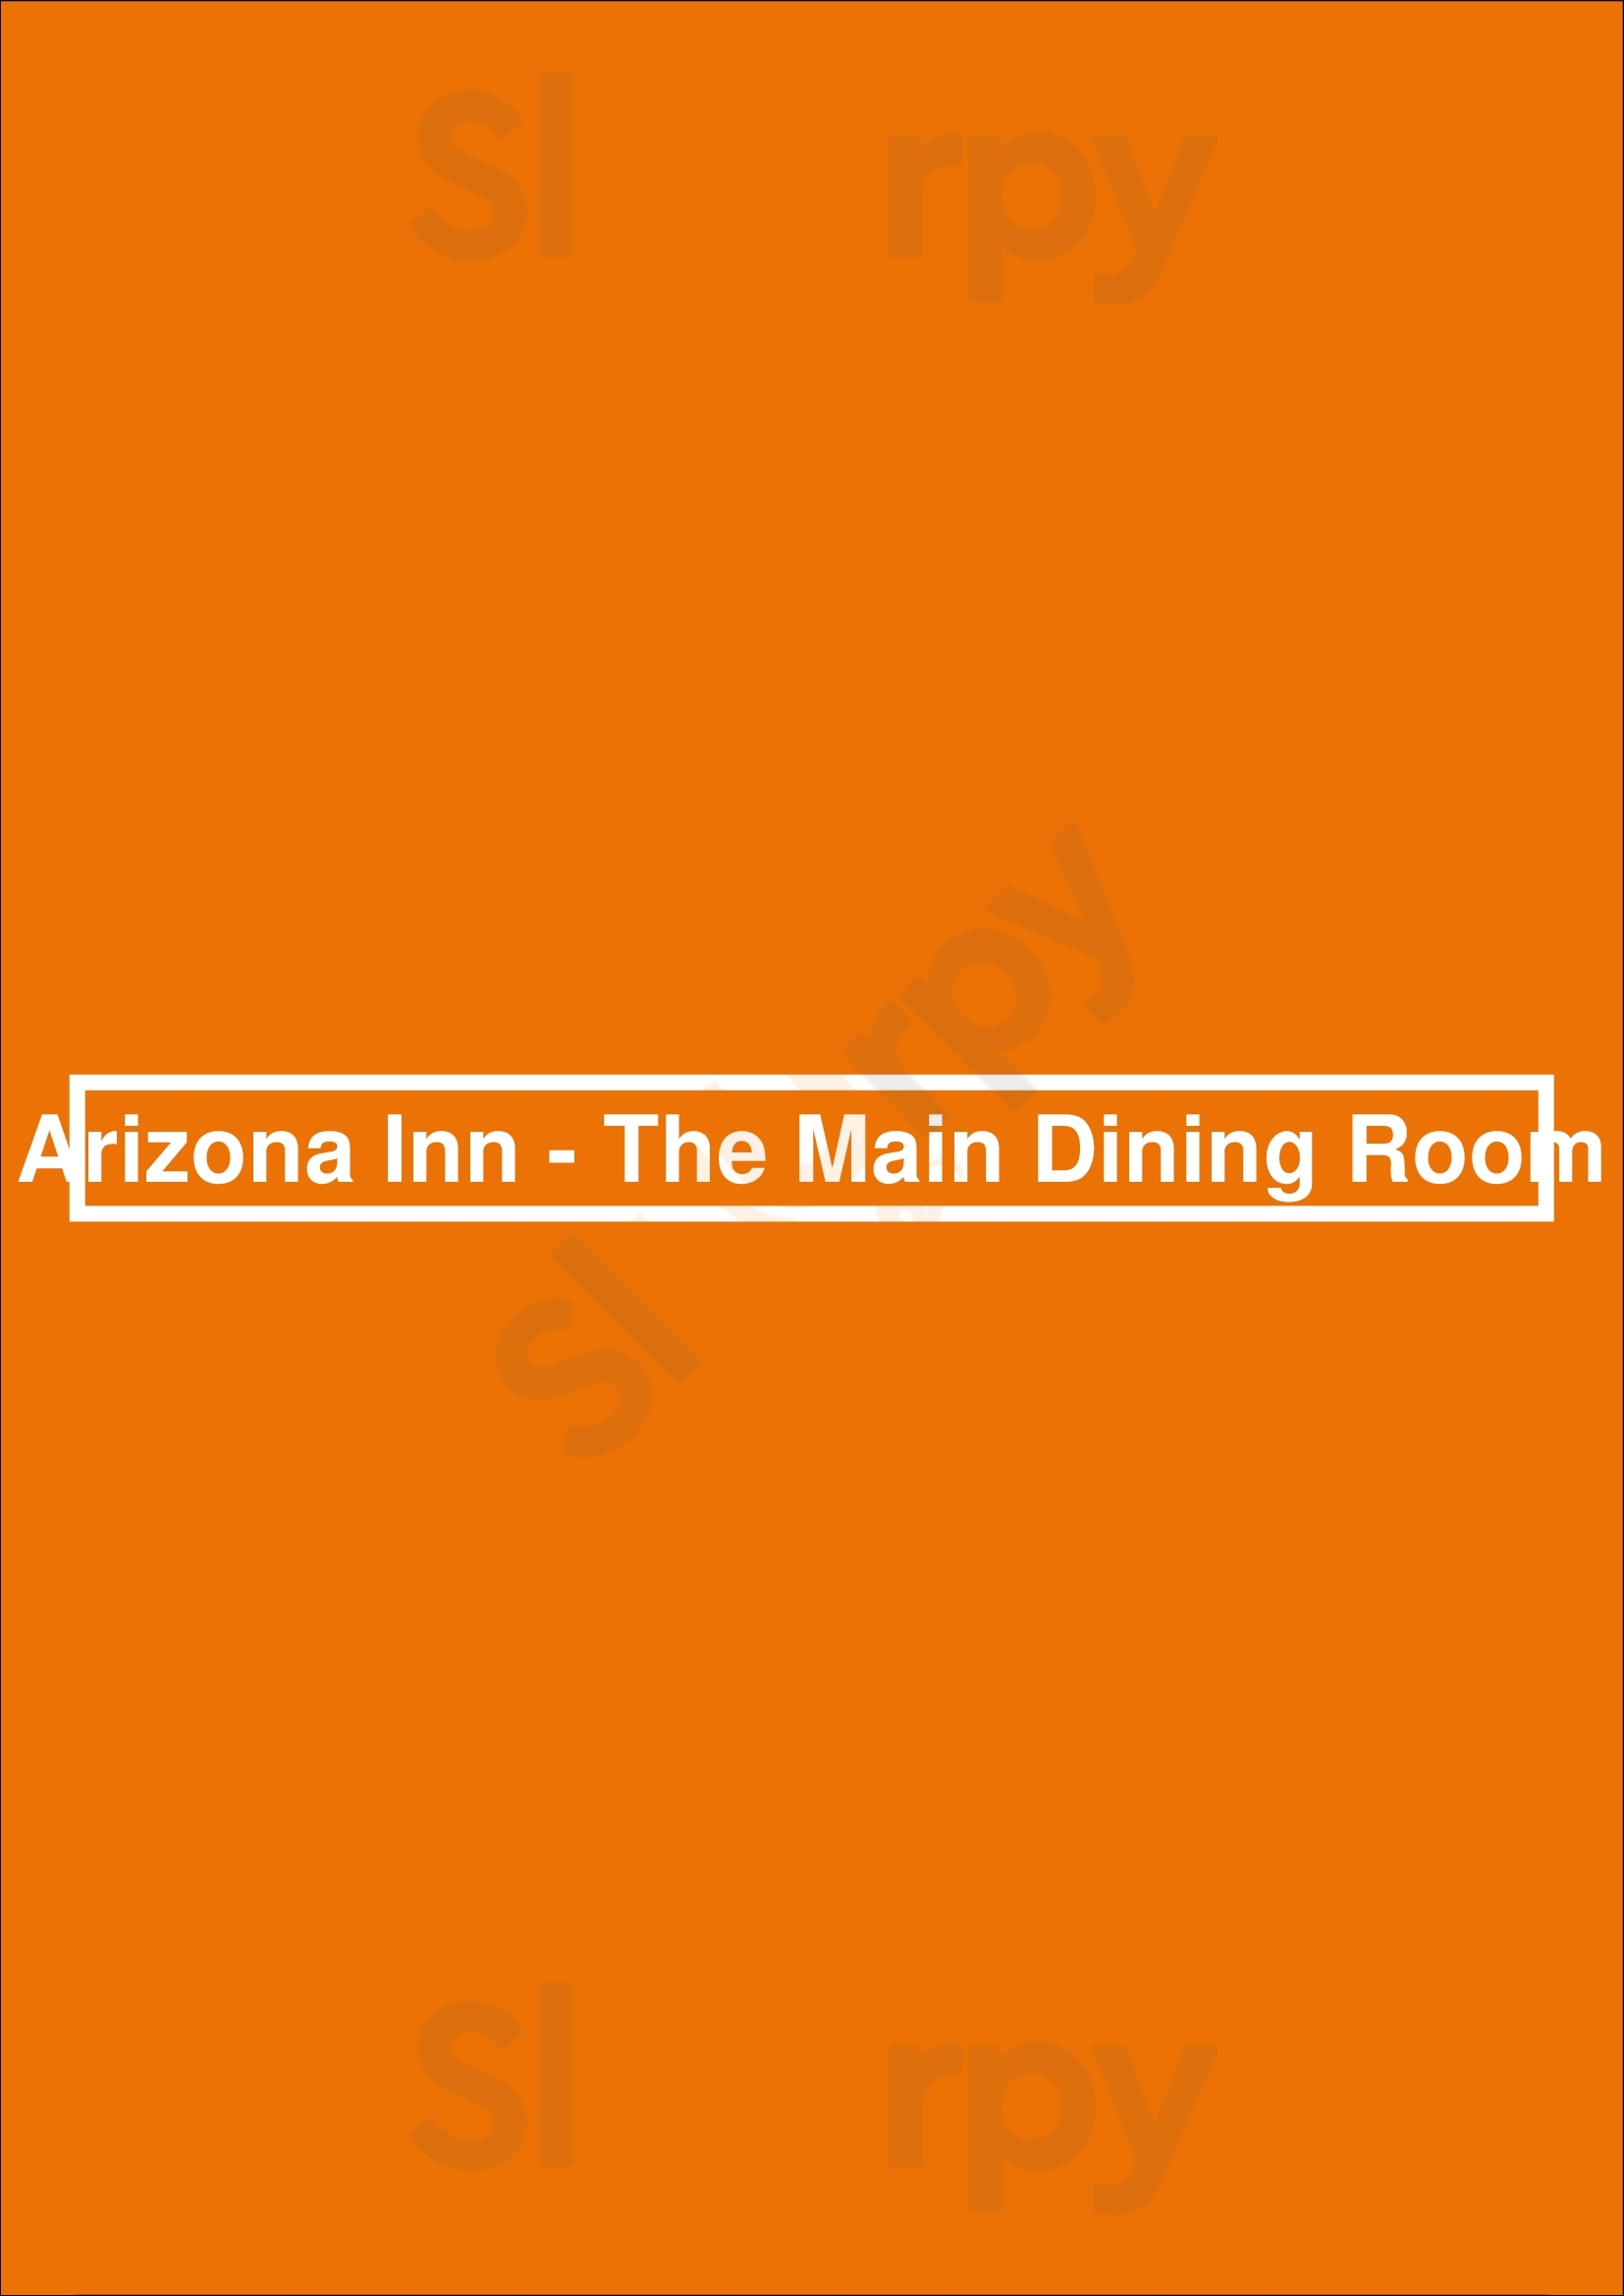 Arizona Inn - The Main Dining Room Tucson Menu - 1